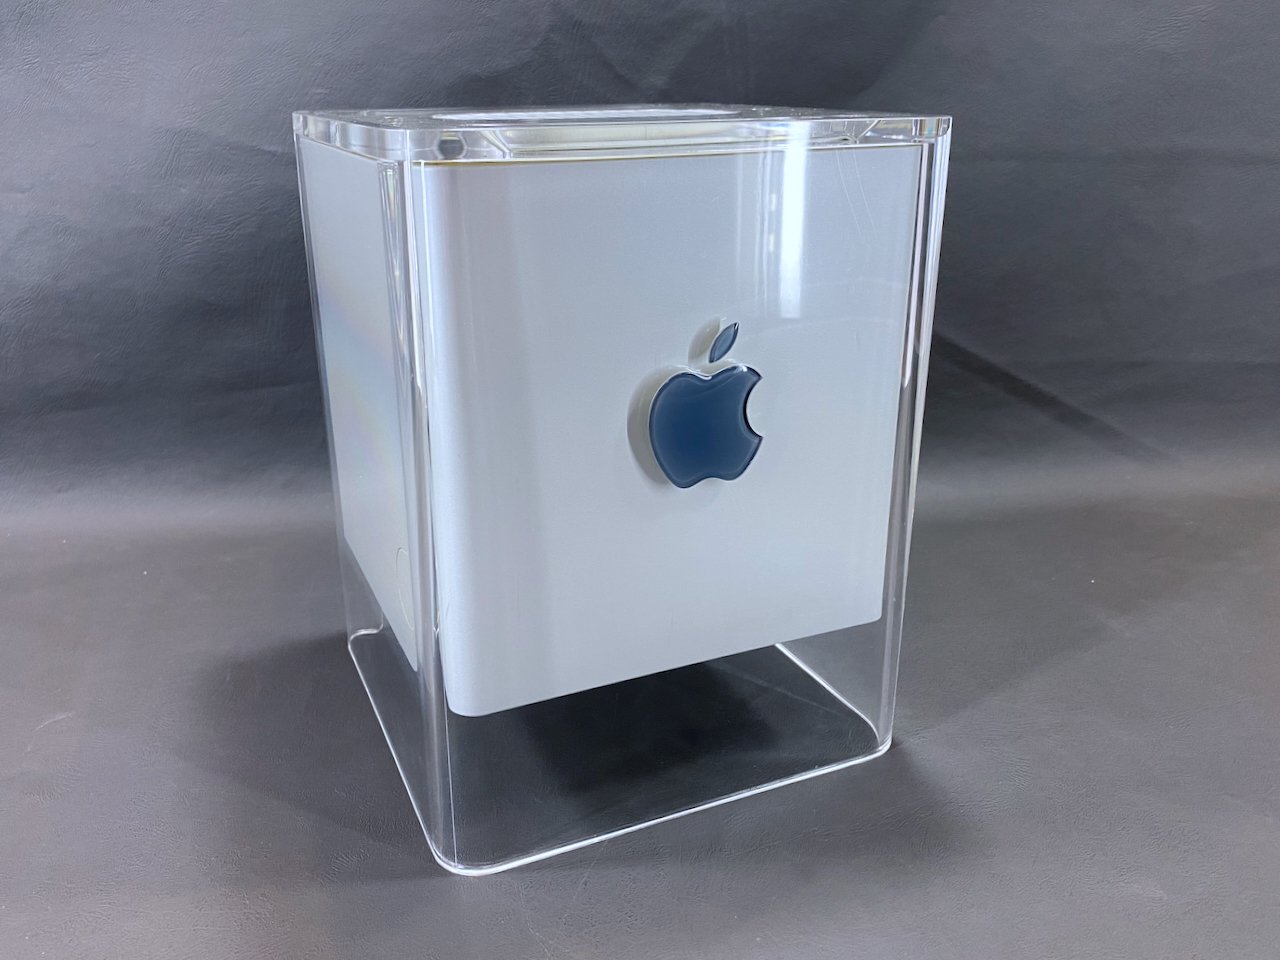 Power Mac G4 Cube — mac27.net